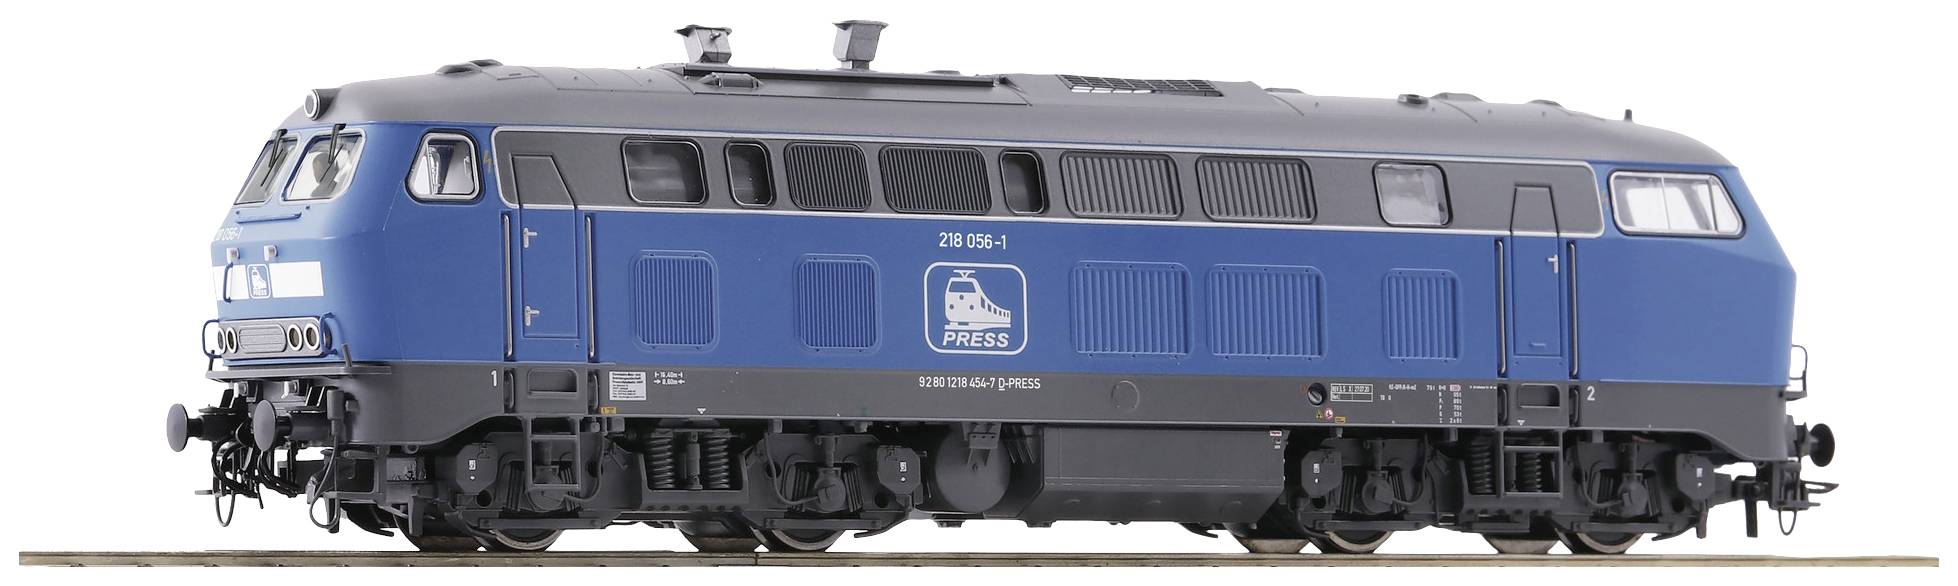 Roco 7320025 Dieselová lokomotiva H0 s dieselovou lokomotivou 218 056-1 z PRESS